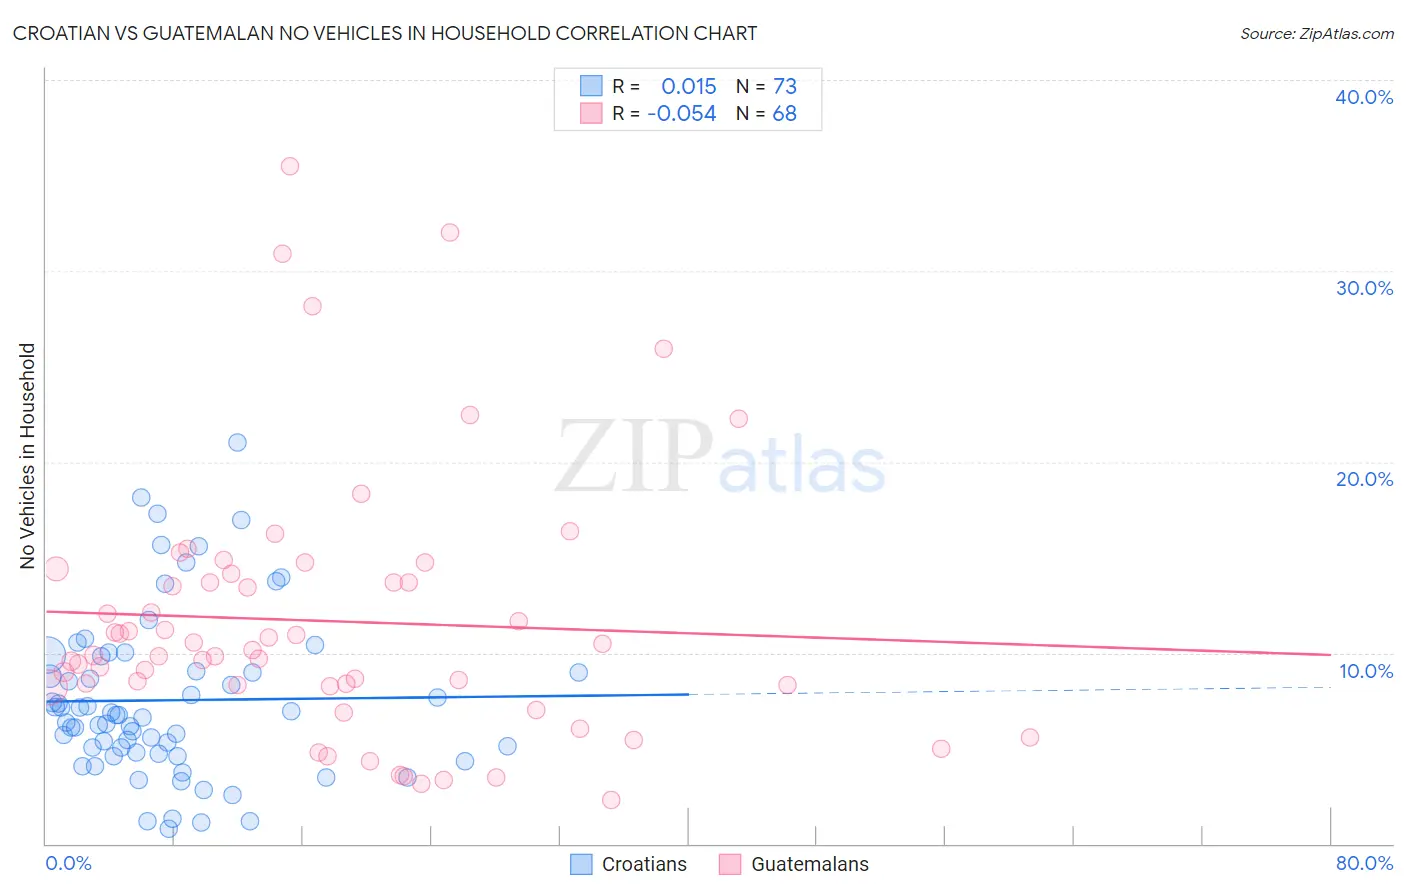 Croatian vs Guatemalan No Vehicles in Household